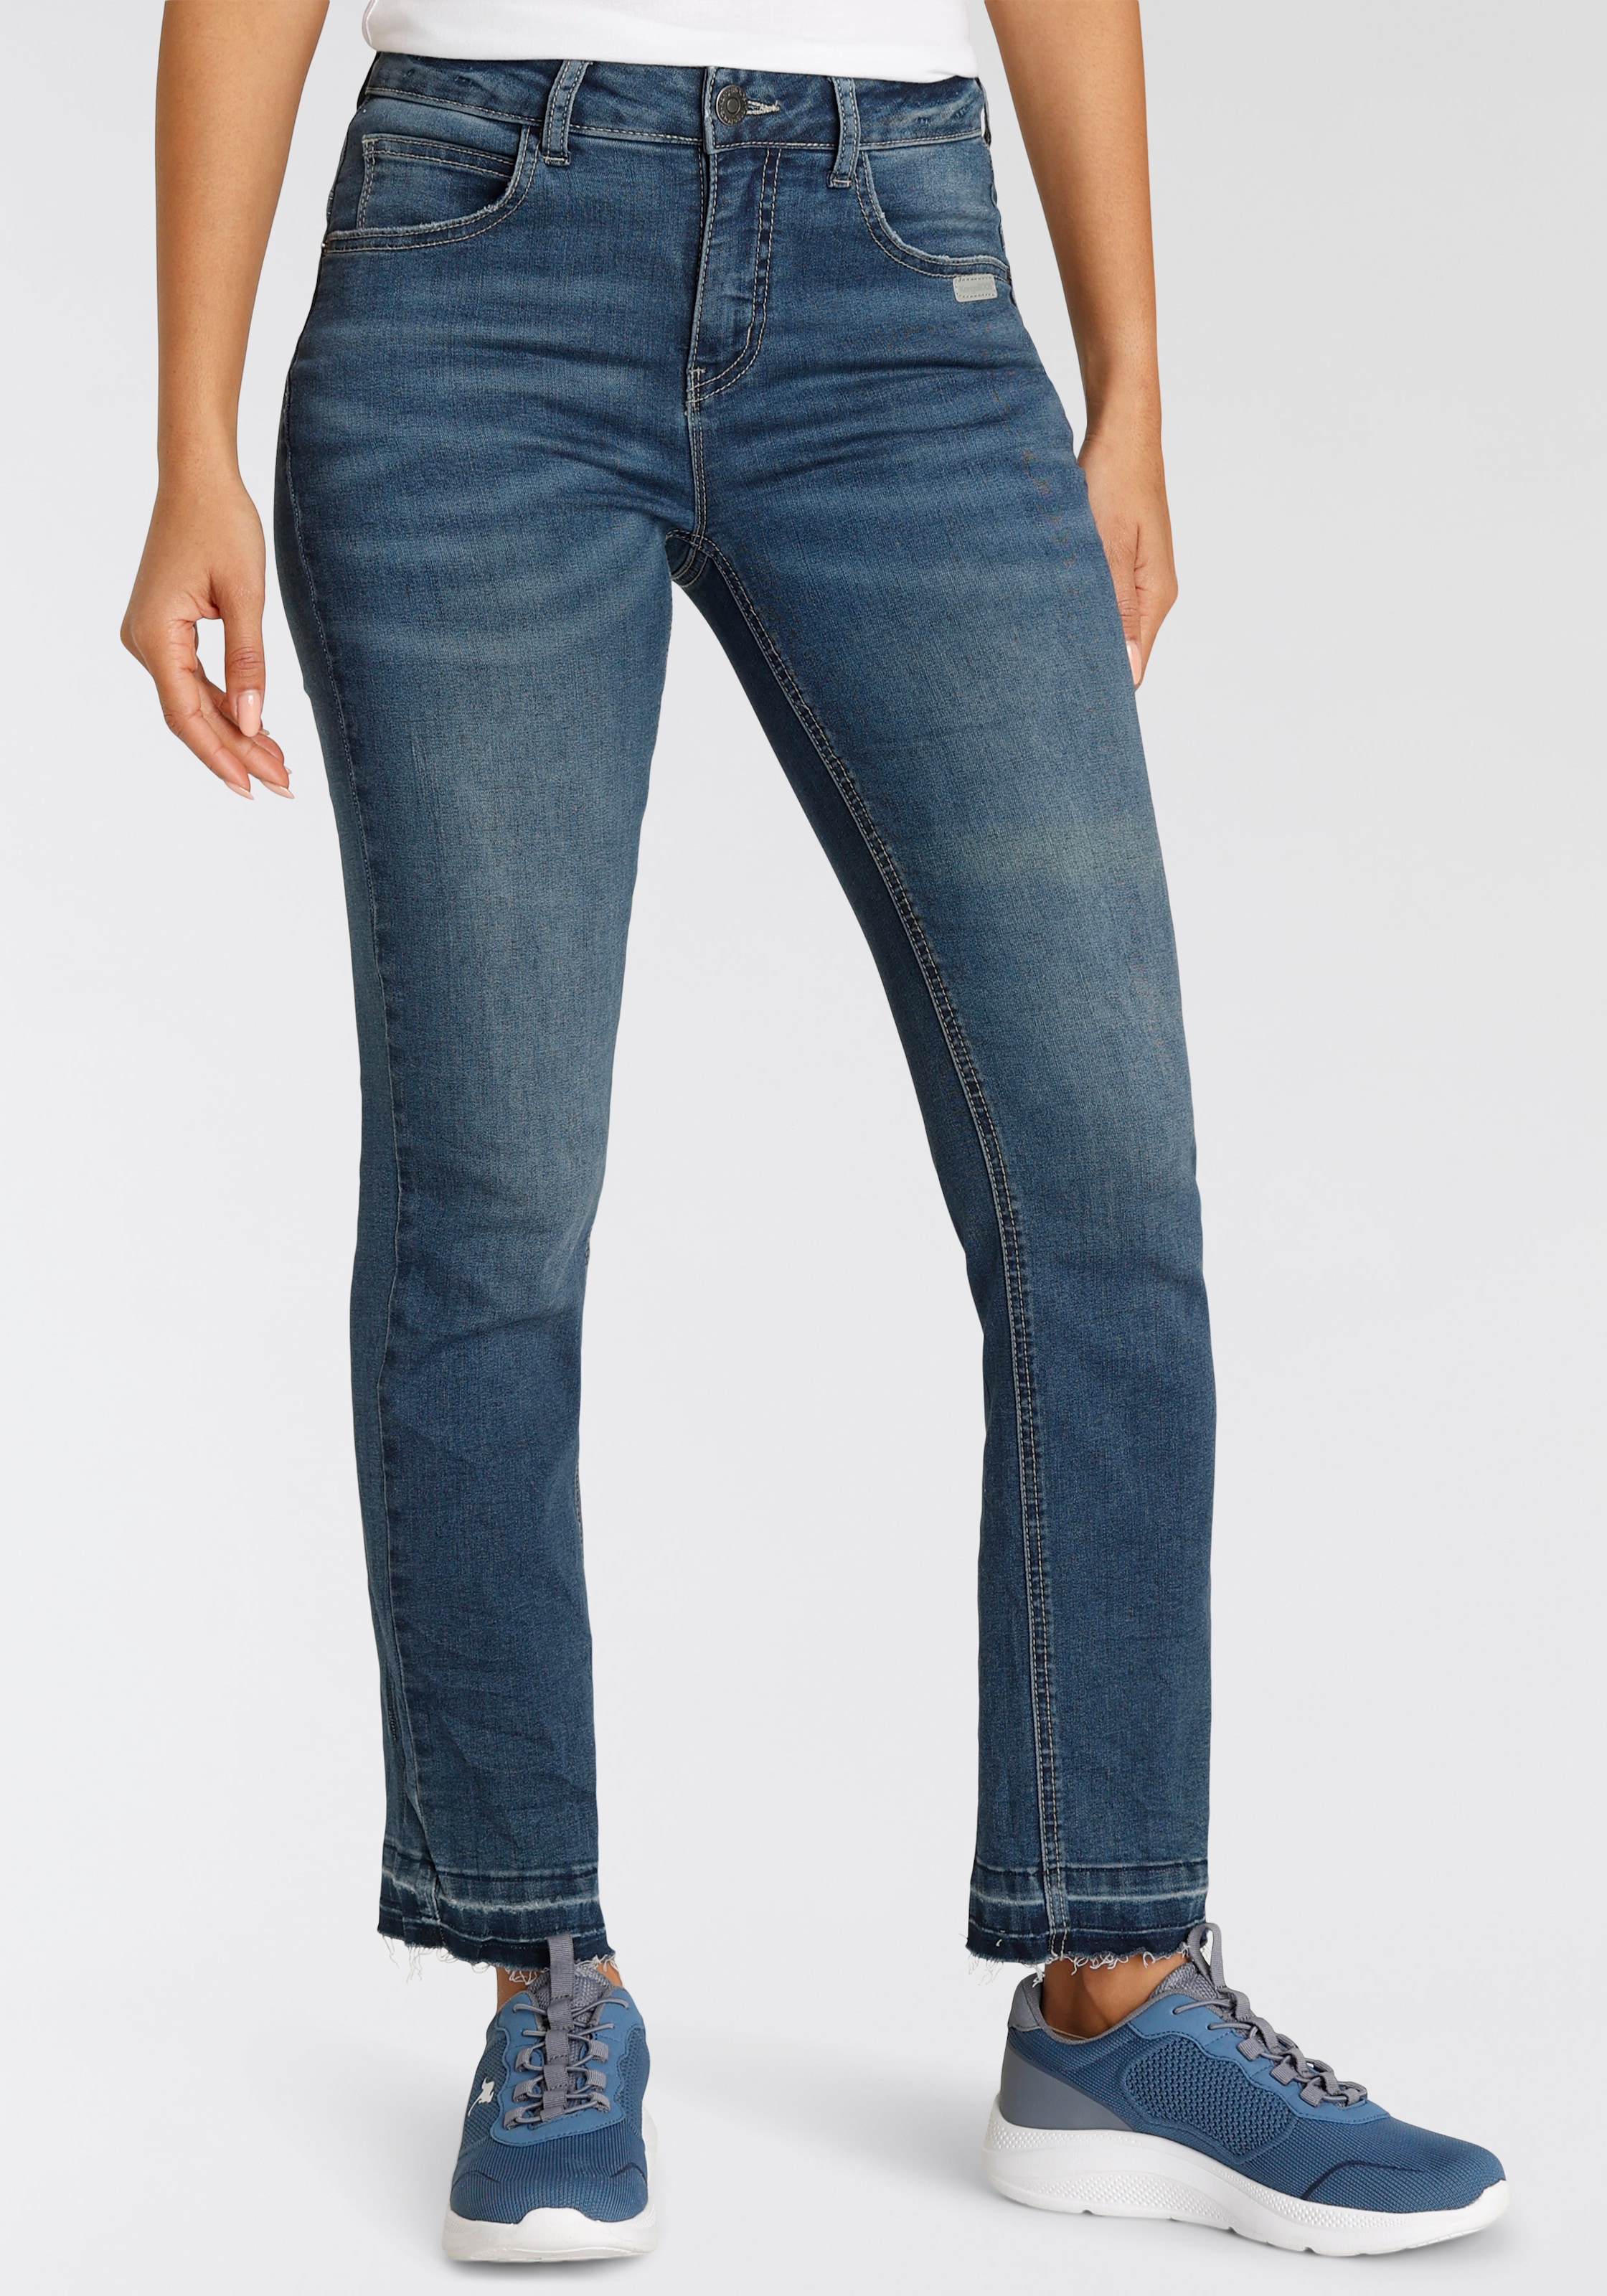 7/8 Damen online günstige bestellen Mode Jeans -